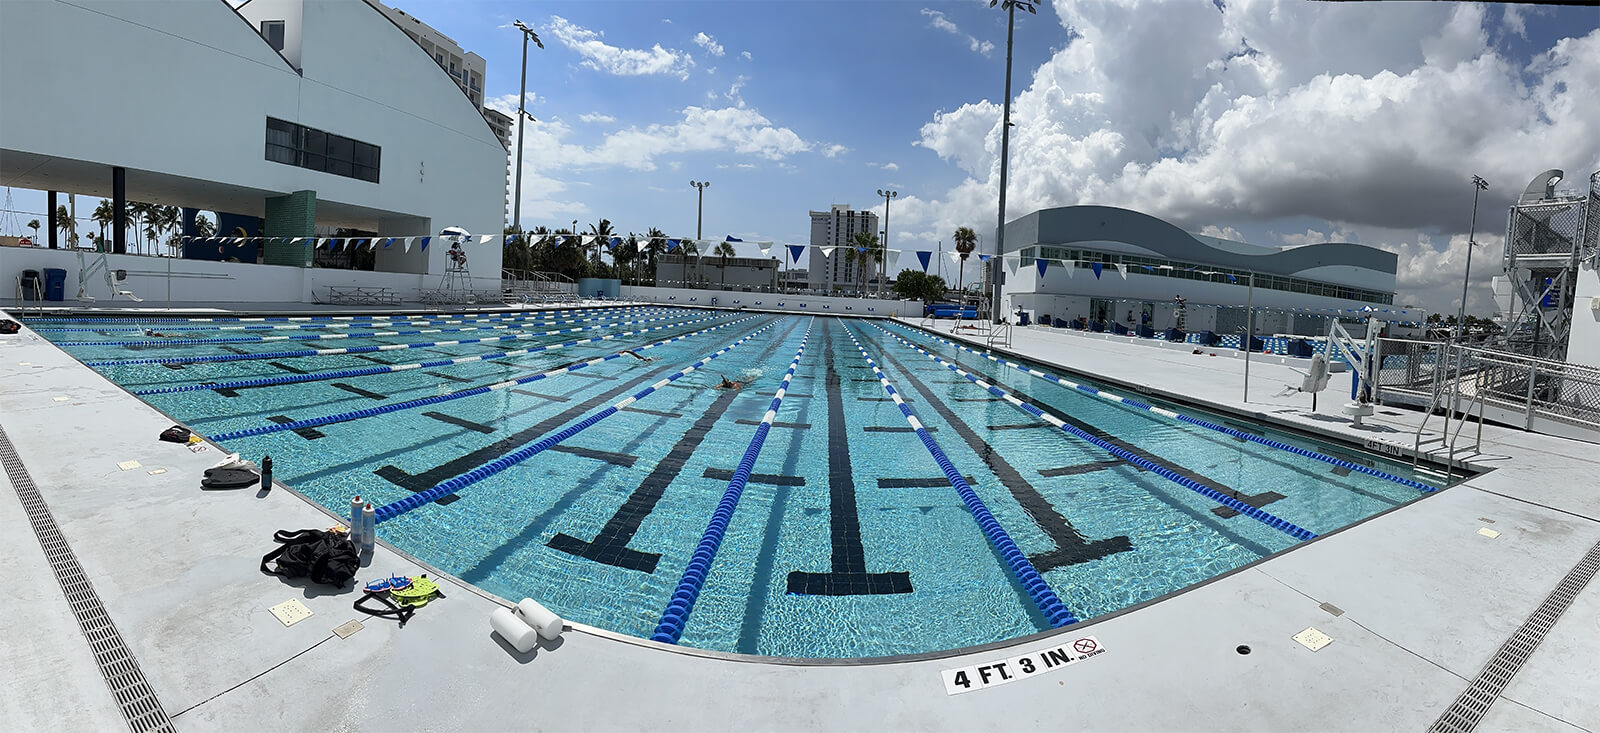 Fort Lauderdale Aquatic Complex (Training pool)